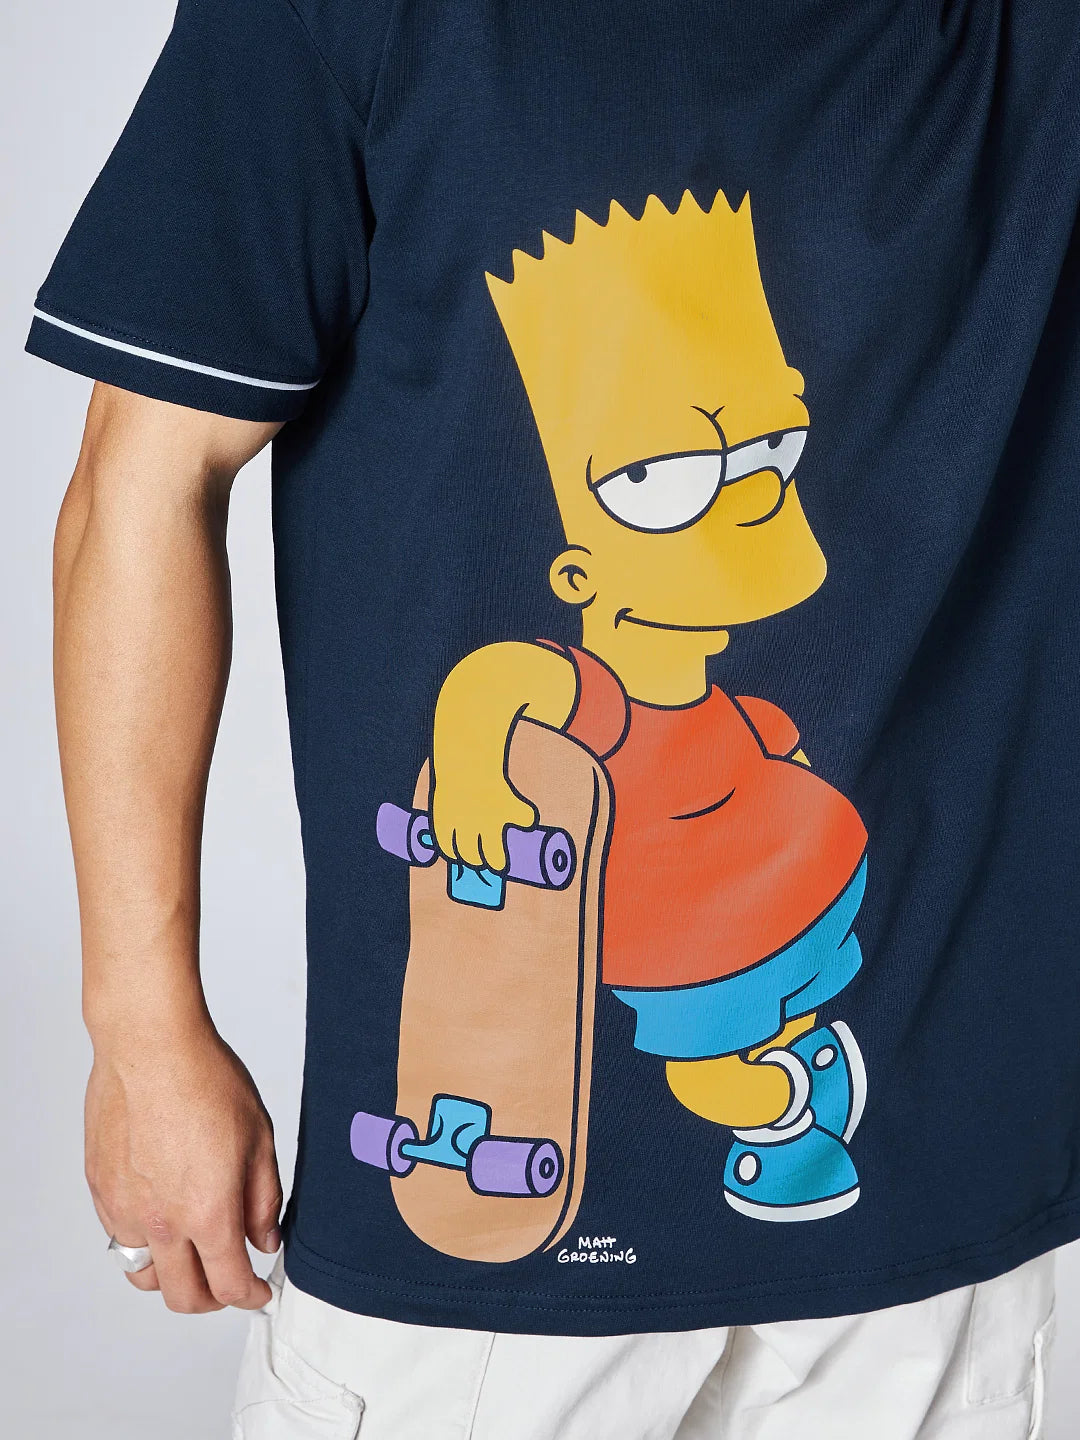 The Simpsons Flexing Like Bart Simpson (UK version)